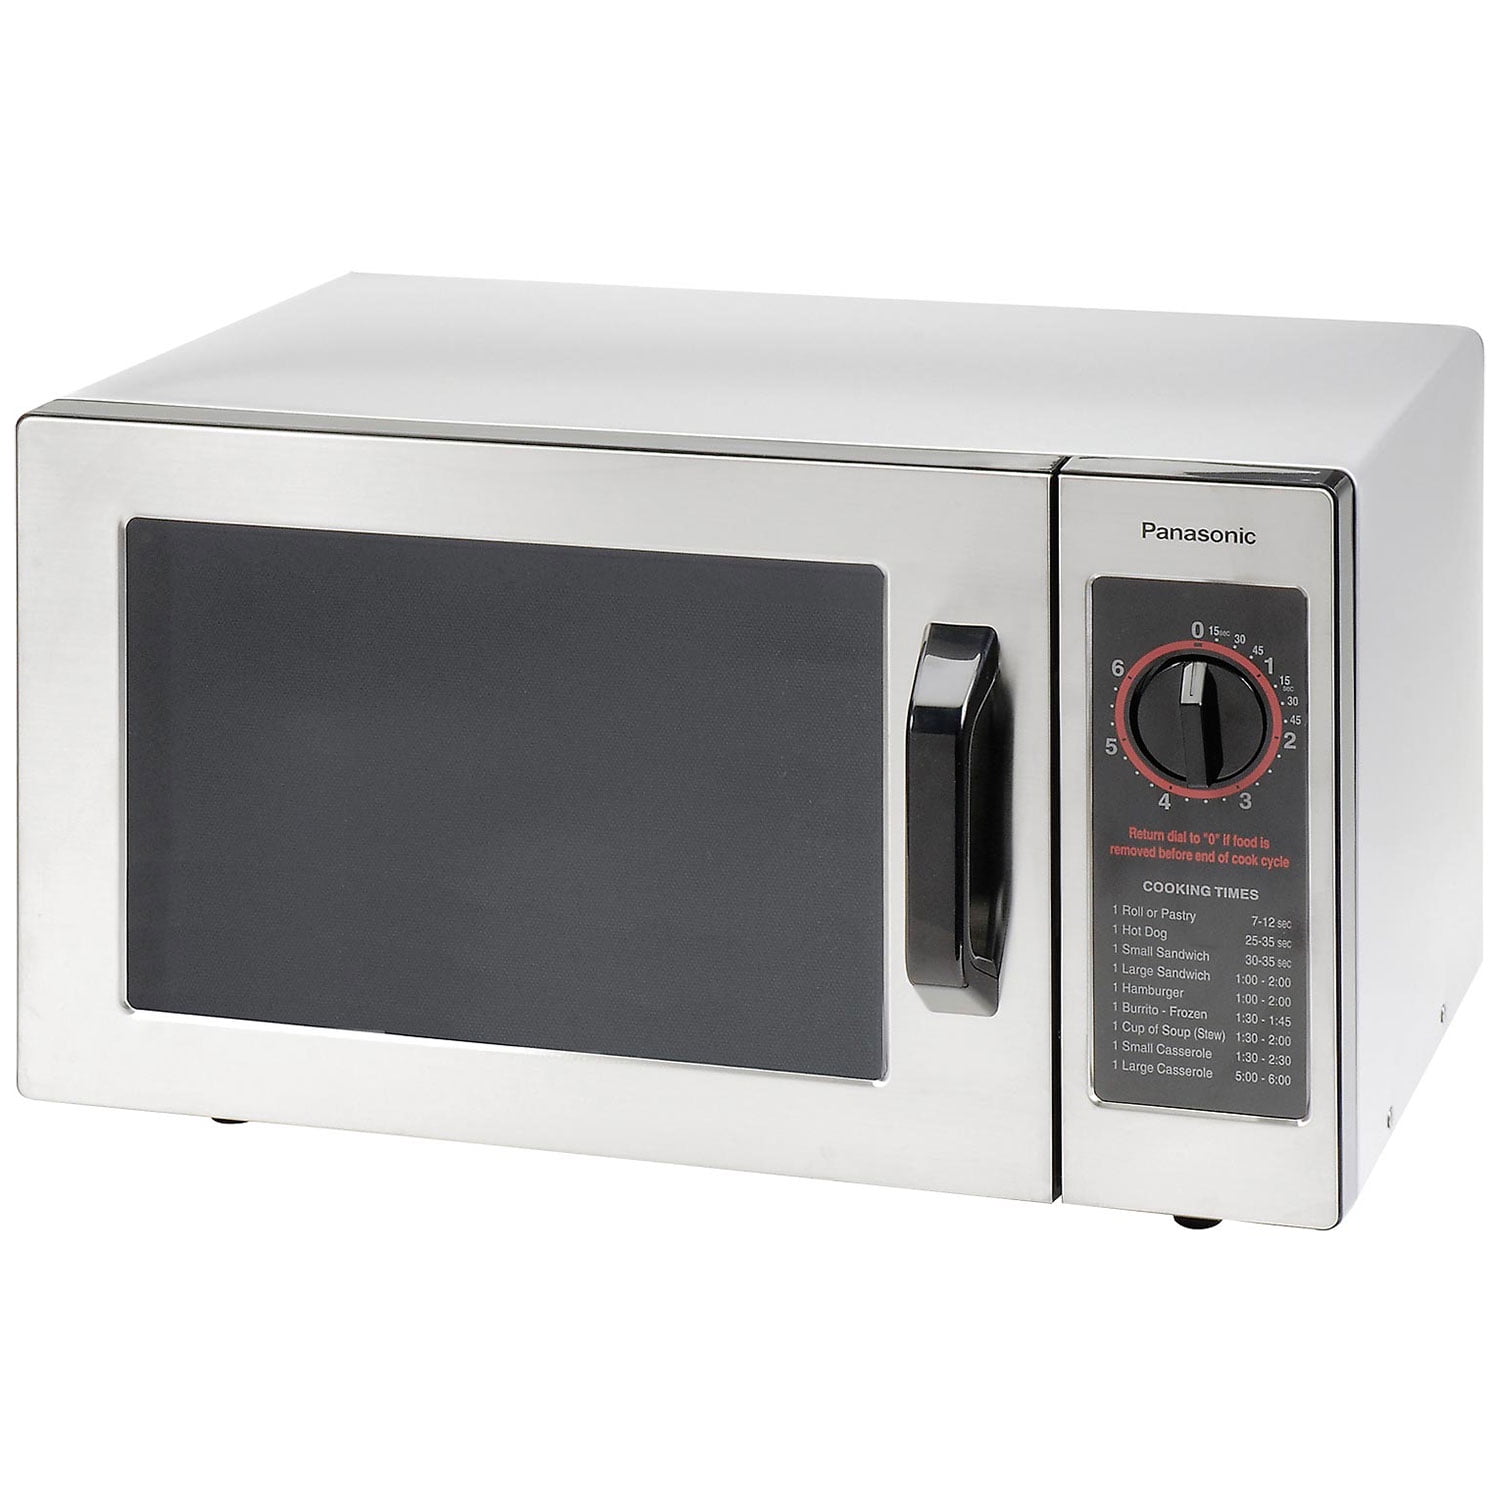 Panasonic NE-1025F - Microwave Oven, 0.8 Cu. Ft. 1000 Watt, Dial